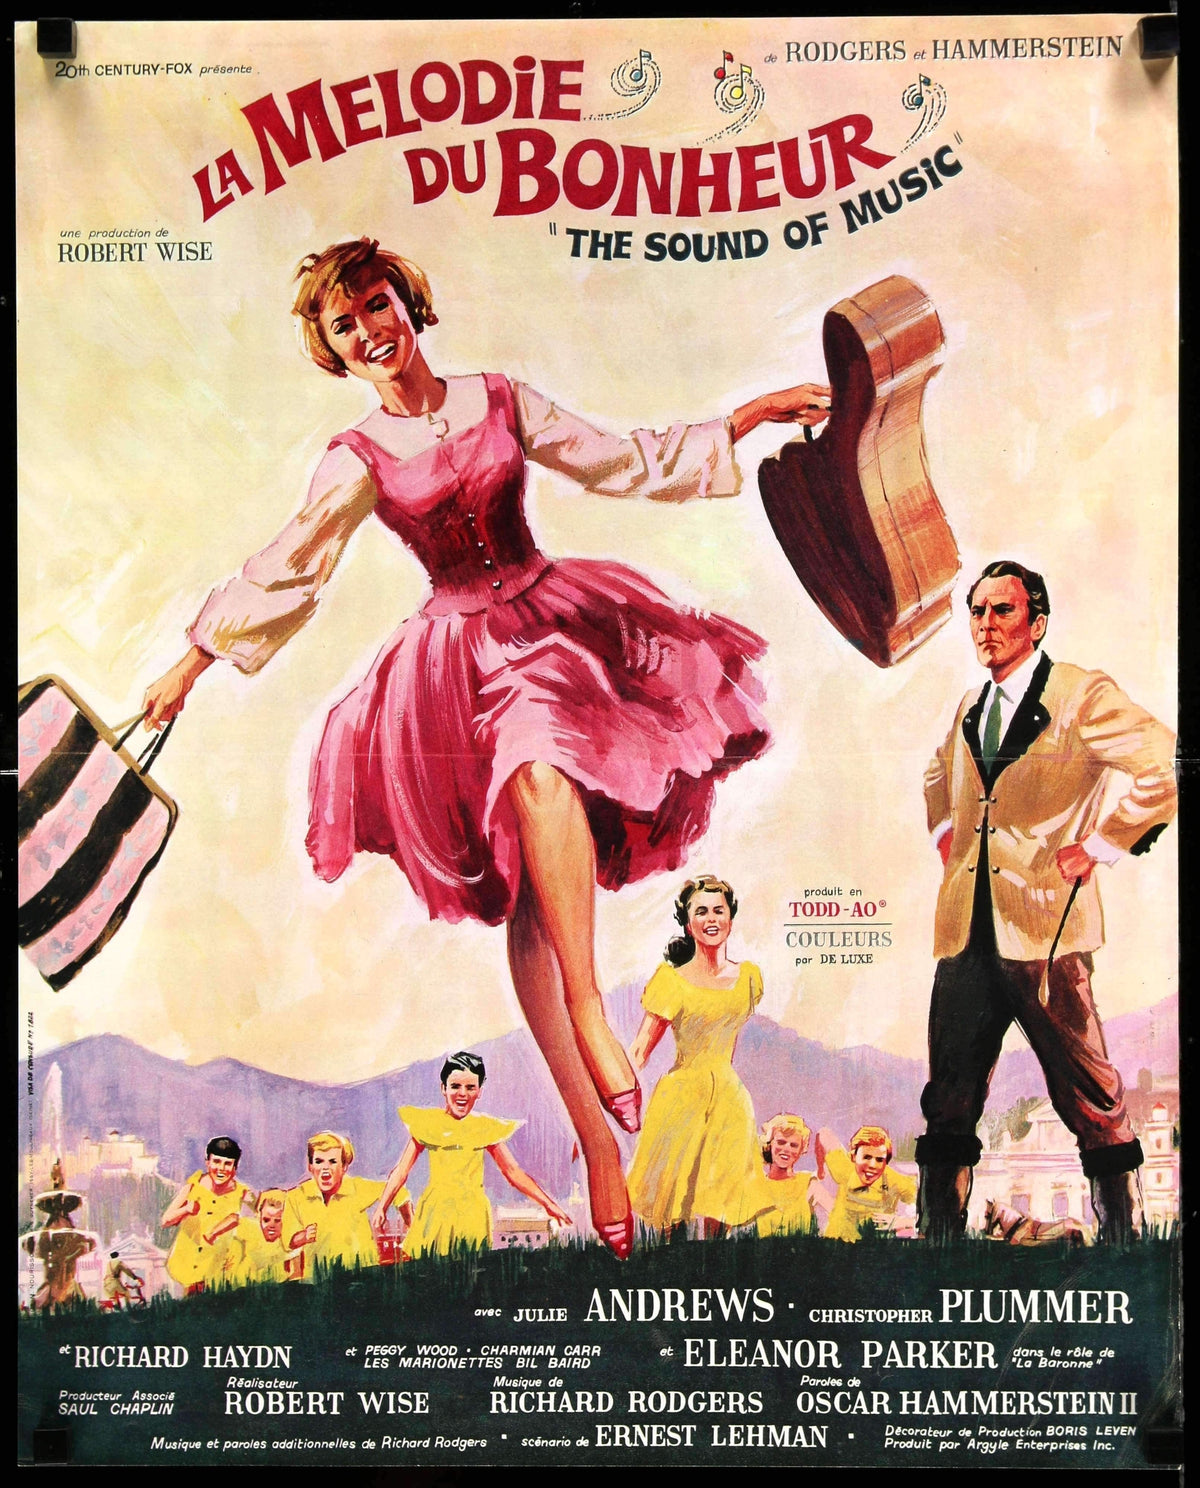 Sound of Music (1965) original movie poster for sale at Original Film Art